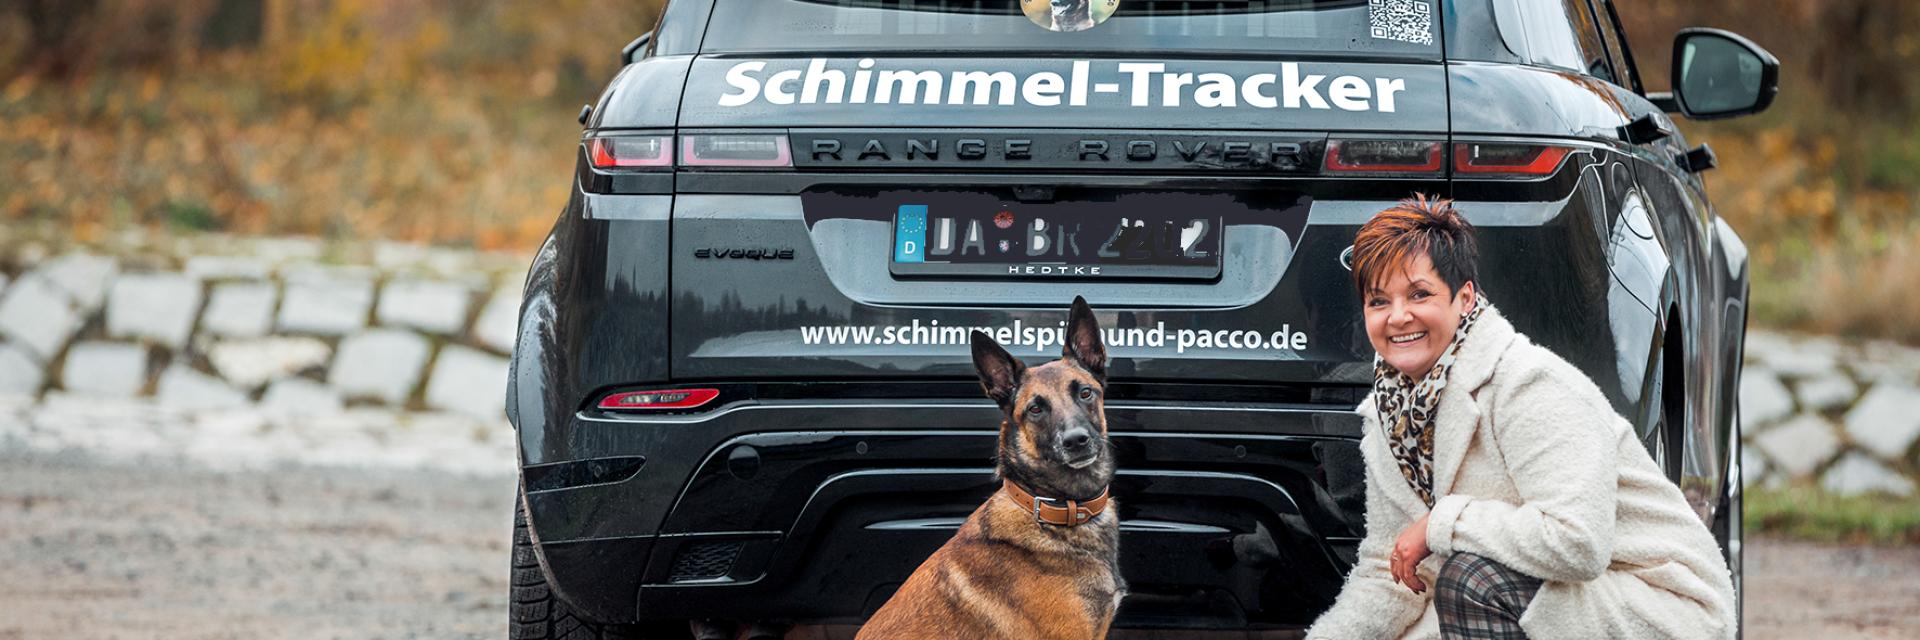 Schimmel-Tracker - Griesheimer Gewerbeverein